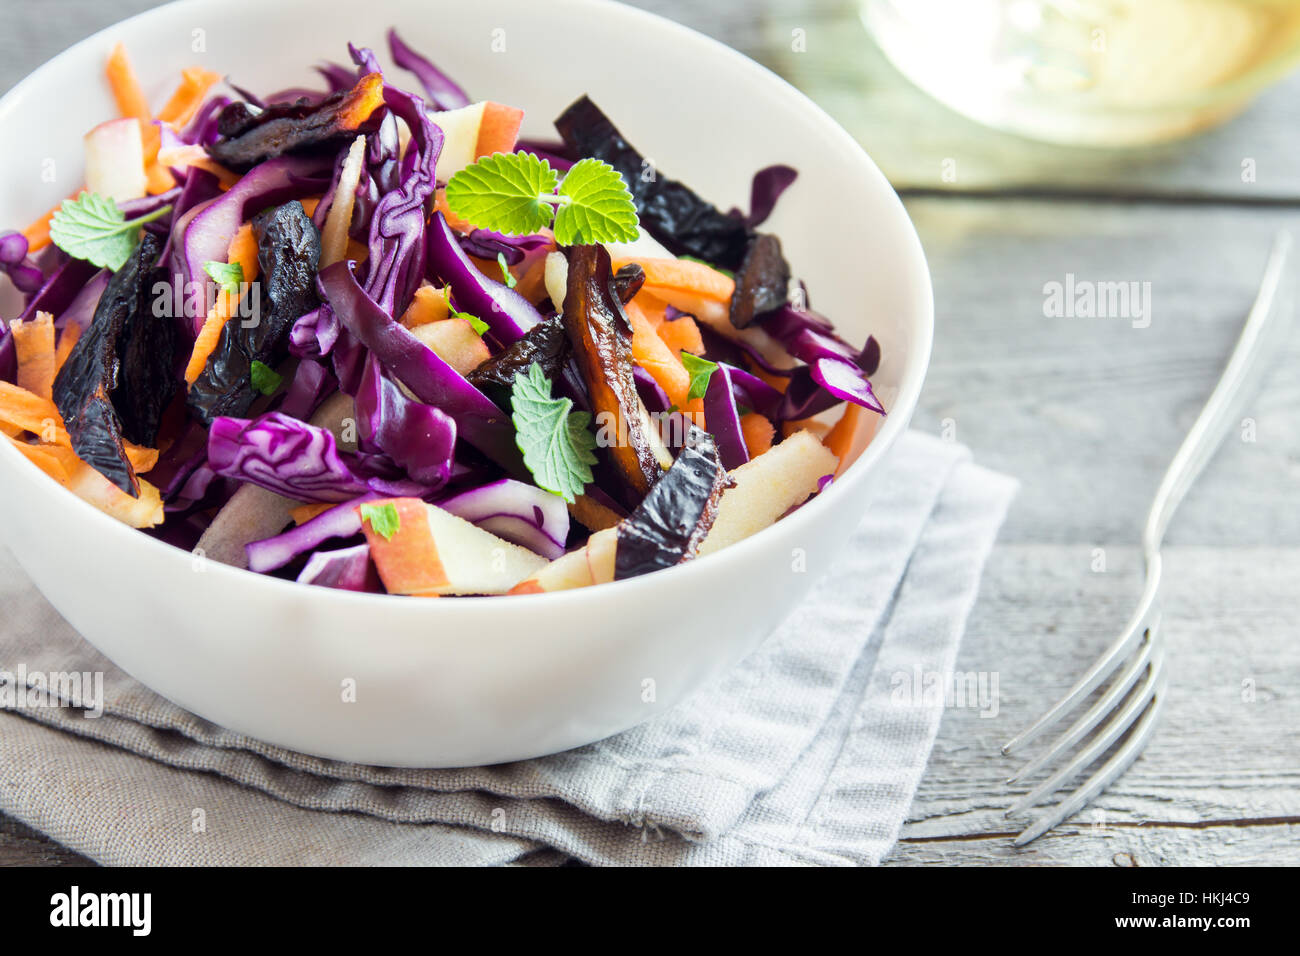 Red Cabbage Coleslaw Salad with Carrots, Apples and Prunes - healthy diet, detox, vegan, vegetarian, vegetable spring salad Stock Photo